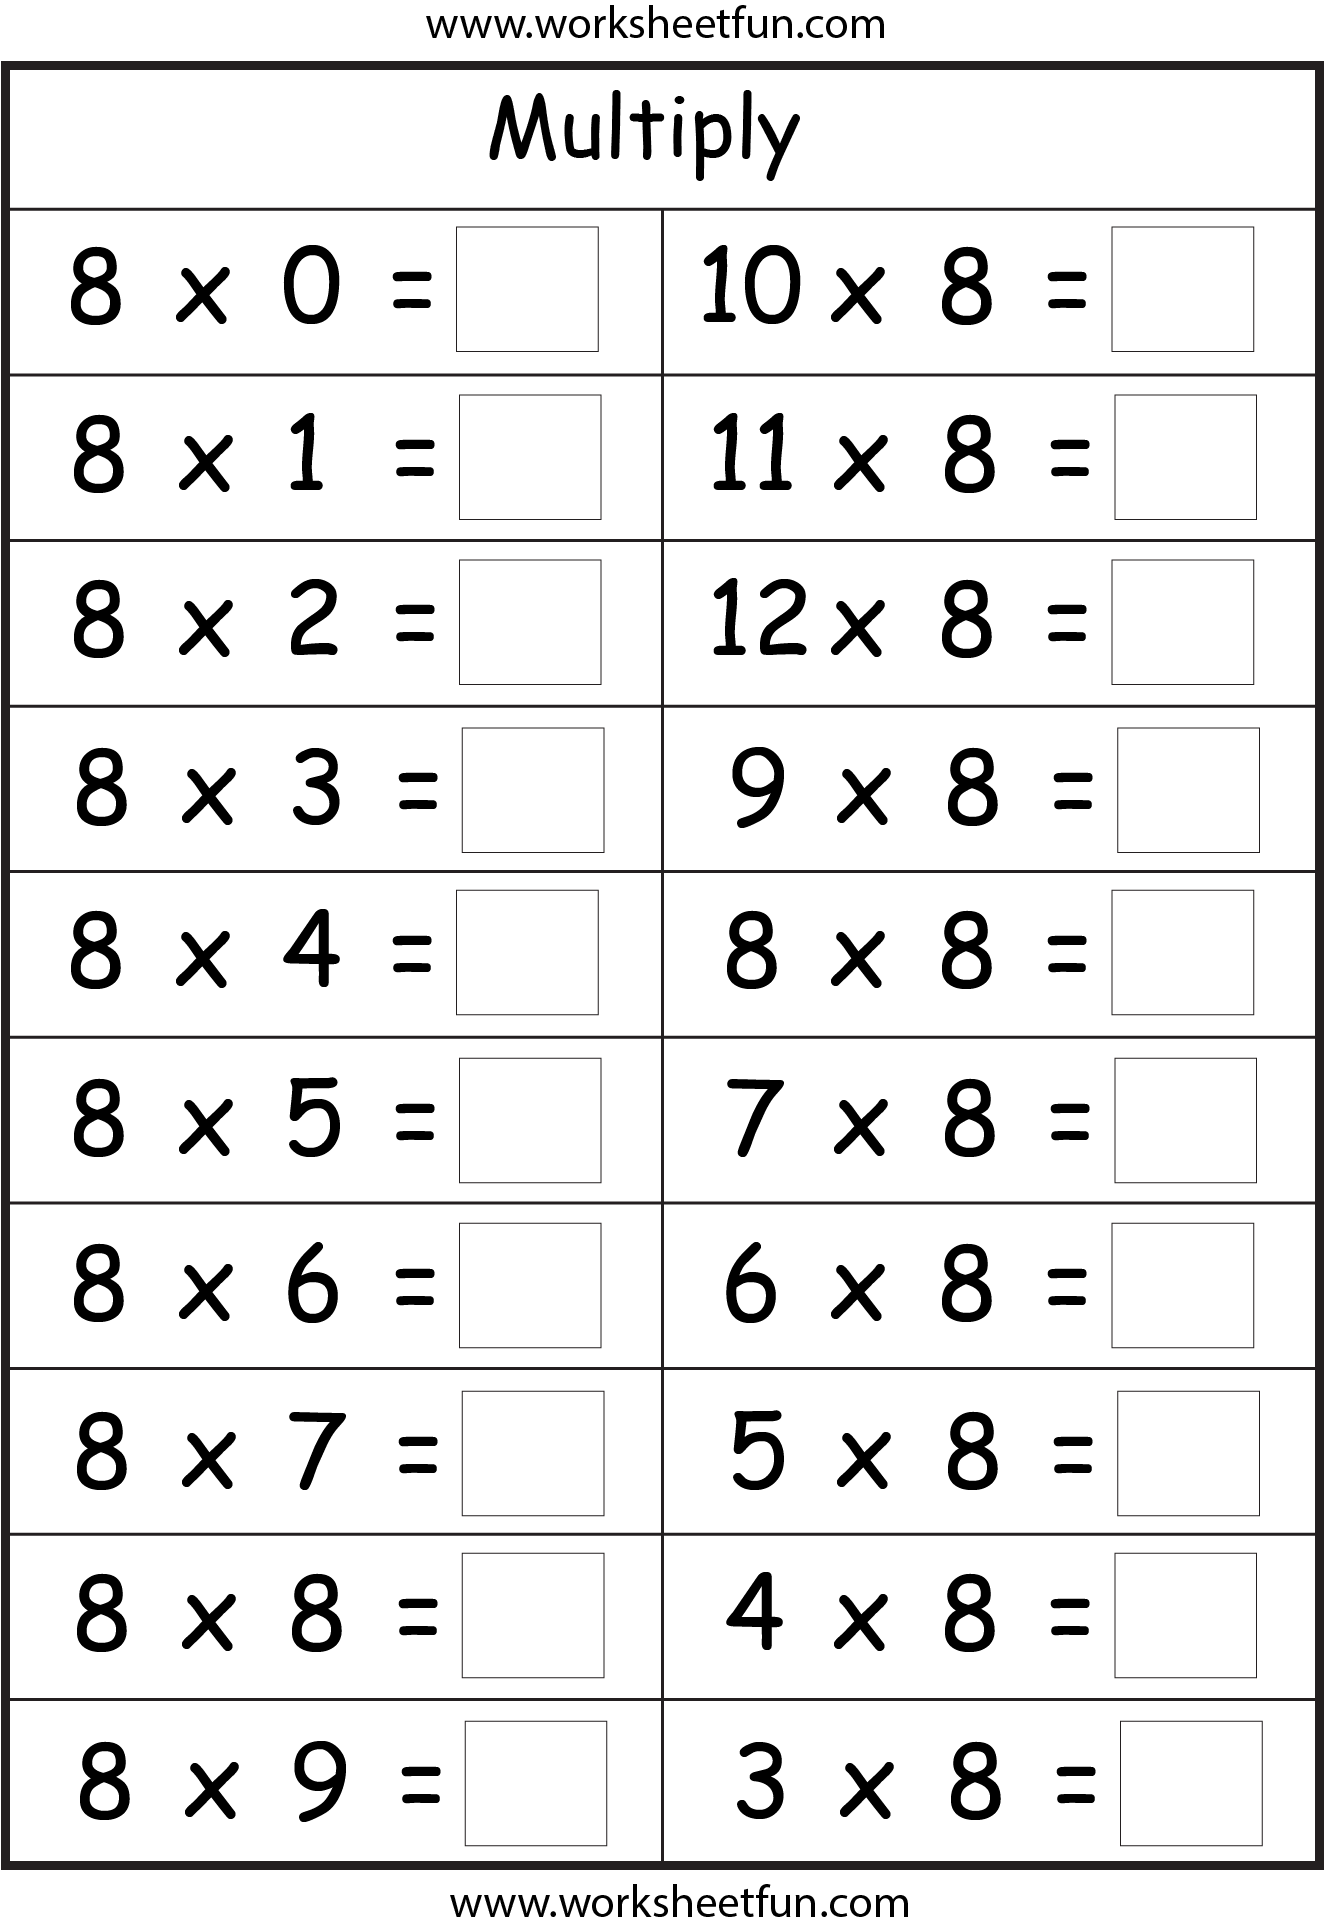 multiplication-chart-printable-super-teacher-printablemultiplication